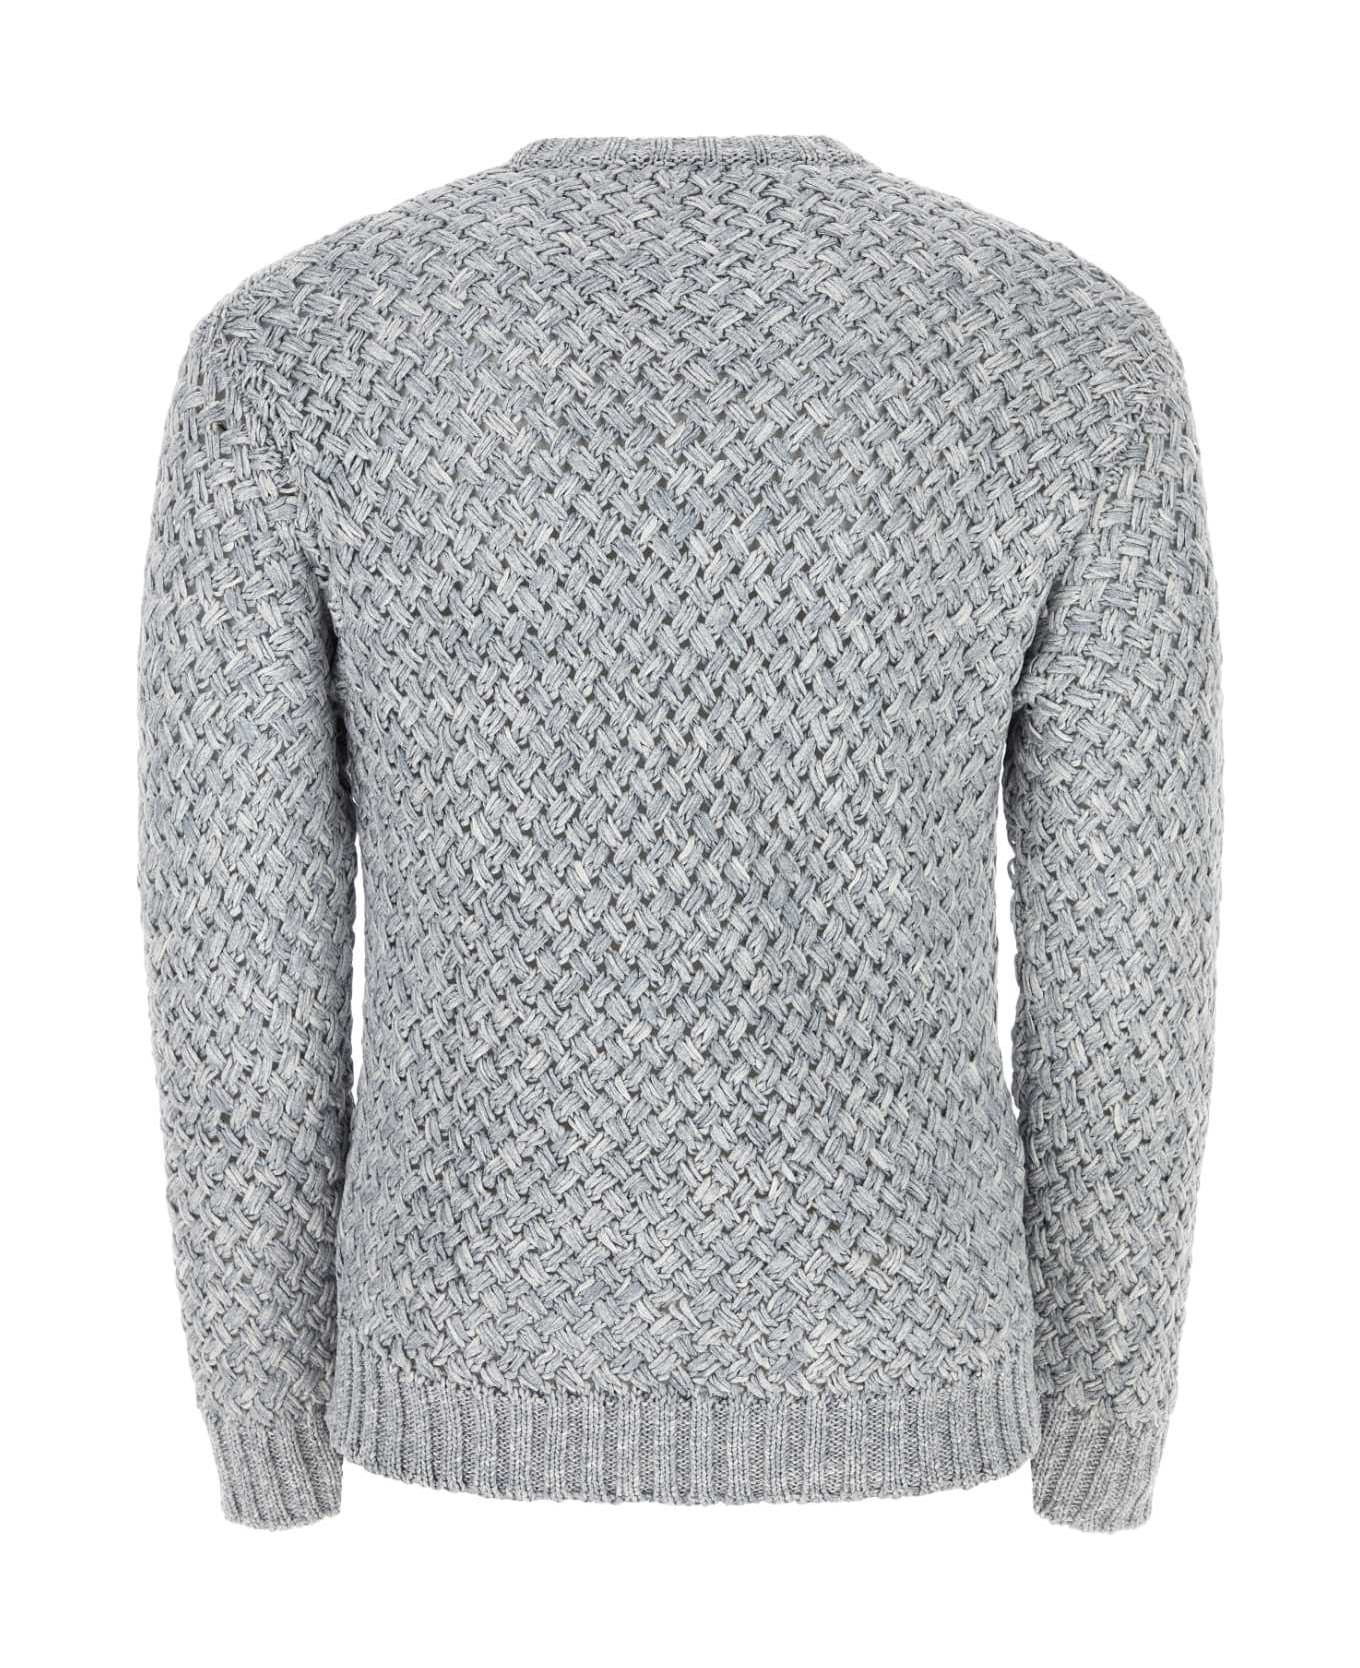 Koché Melange Grey Cotton Sweater - Grey